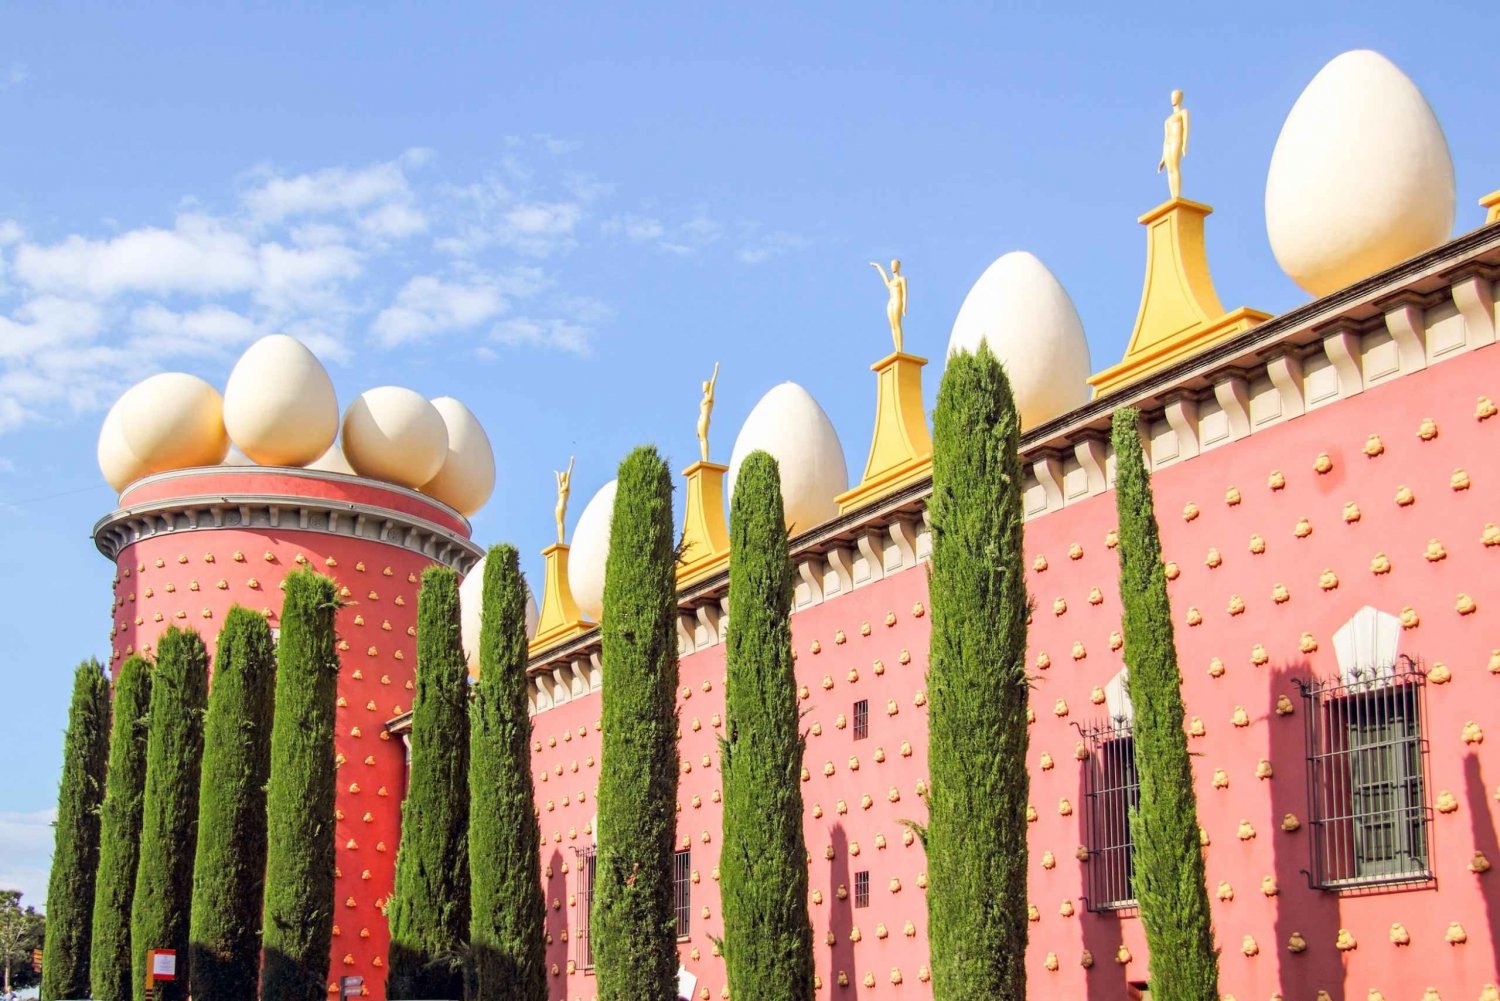 Barcelonasta: Girona, Figueres ja Dalí Museum Day Tour